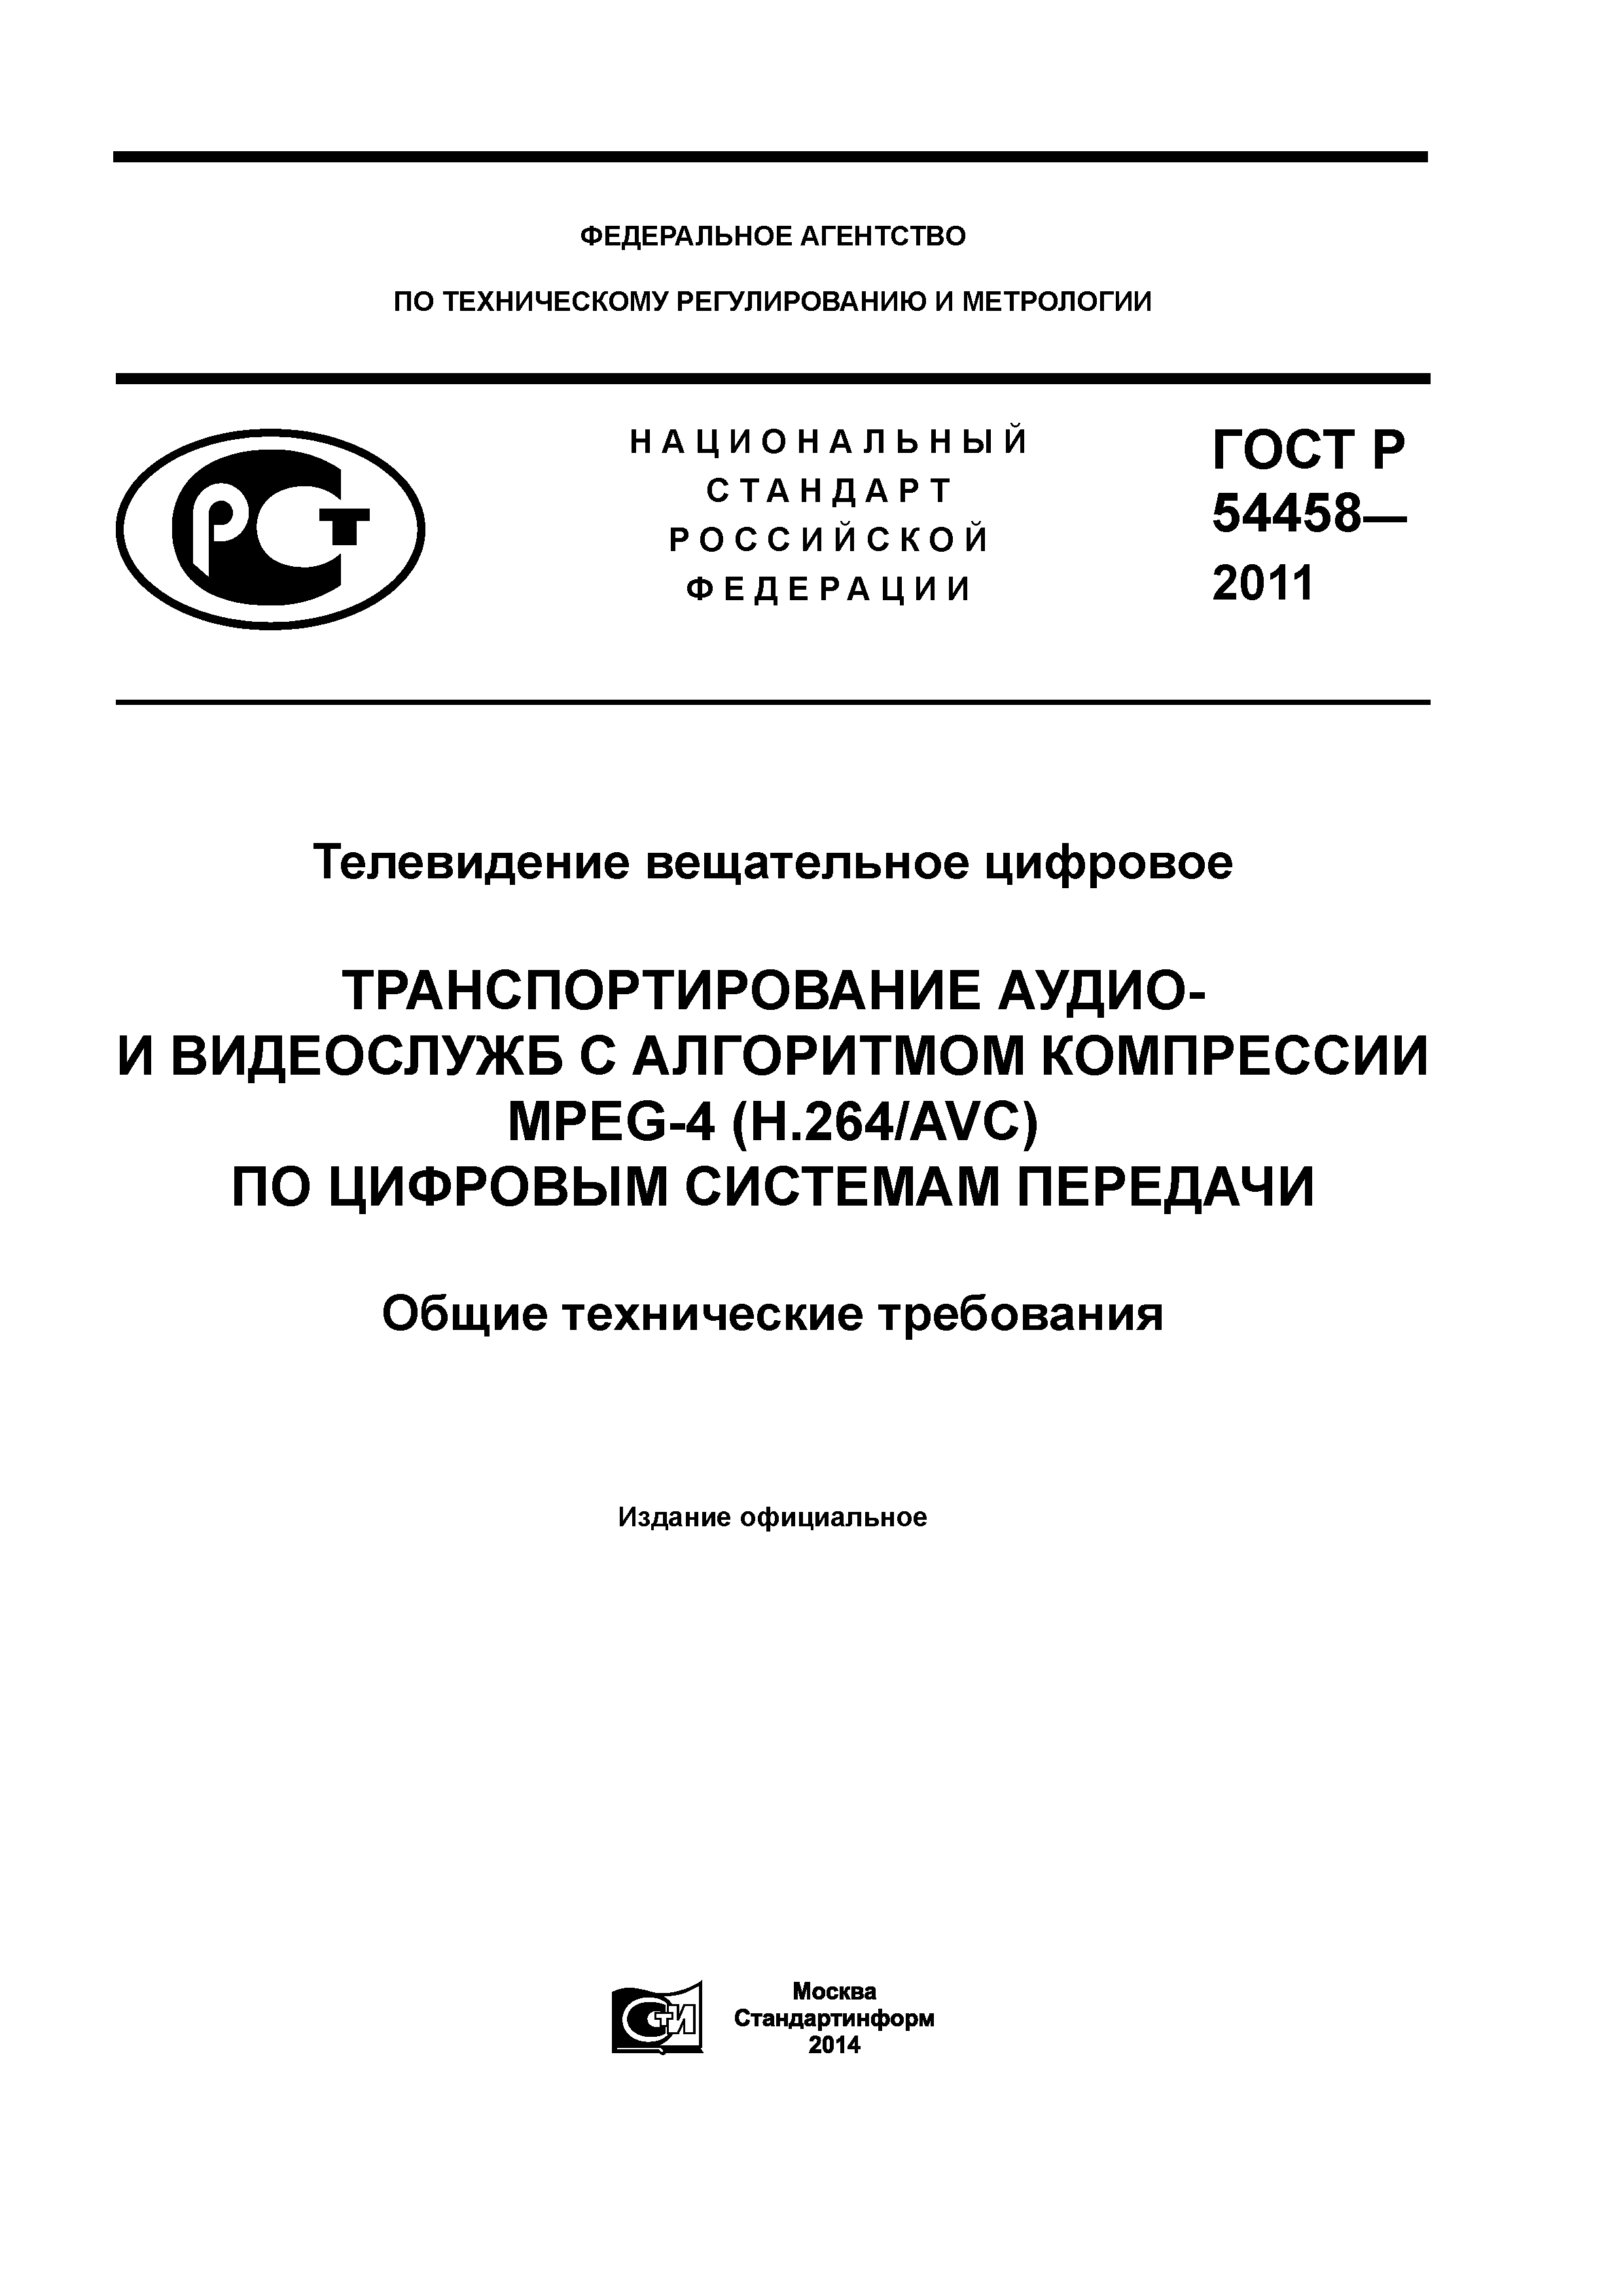 ГОСТ Р 54458-2011